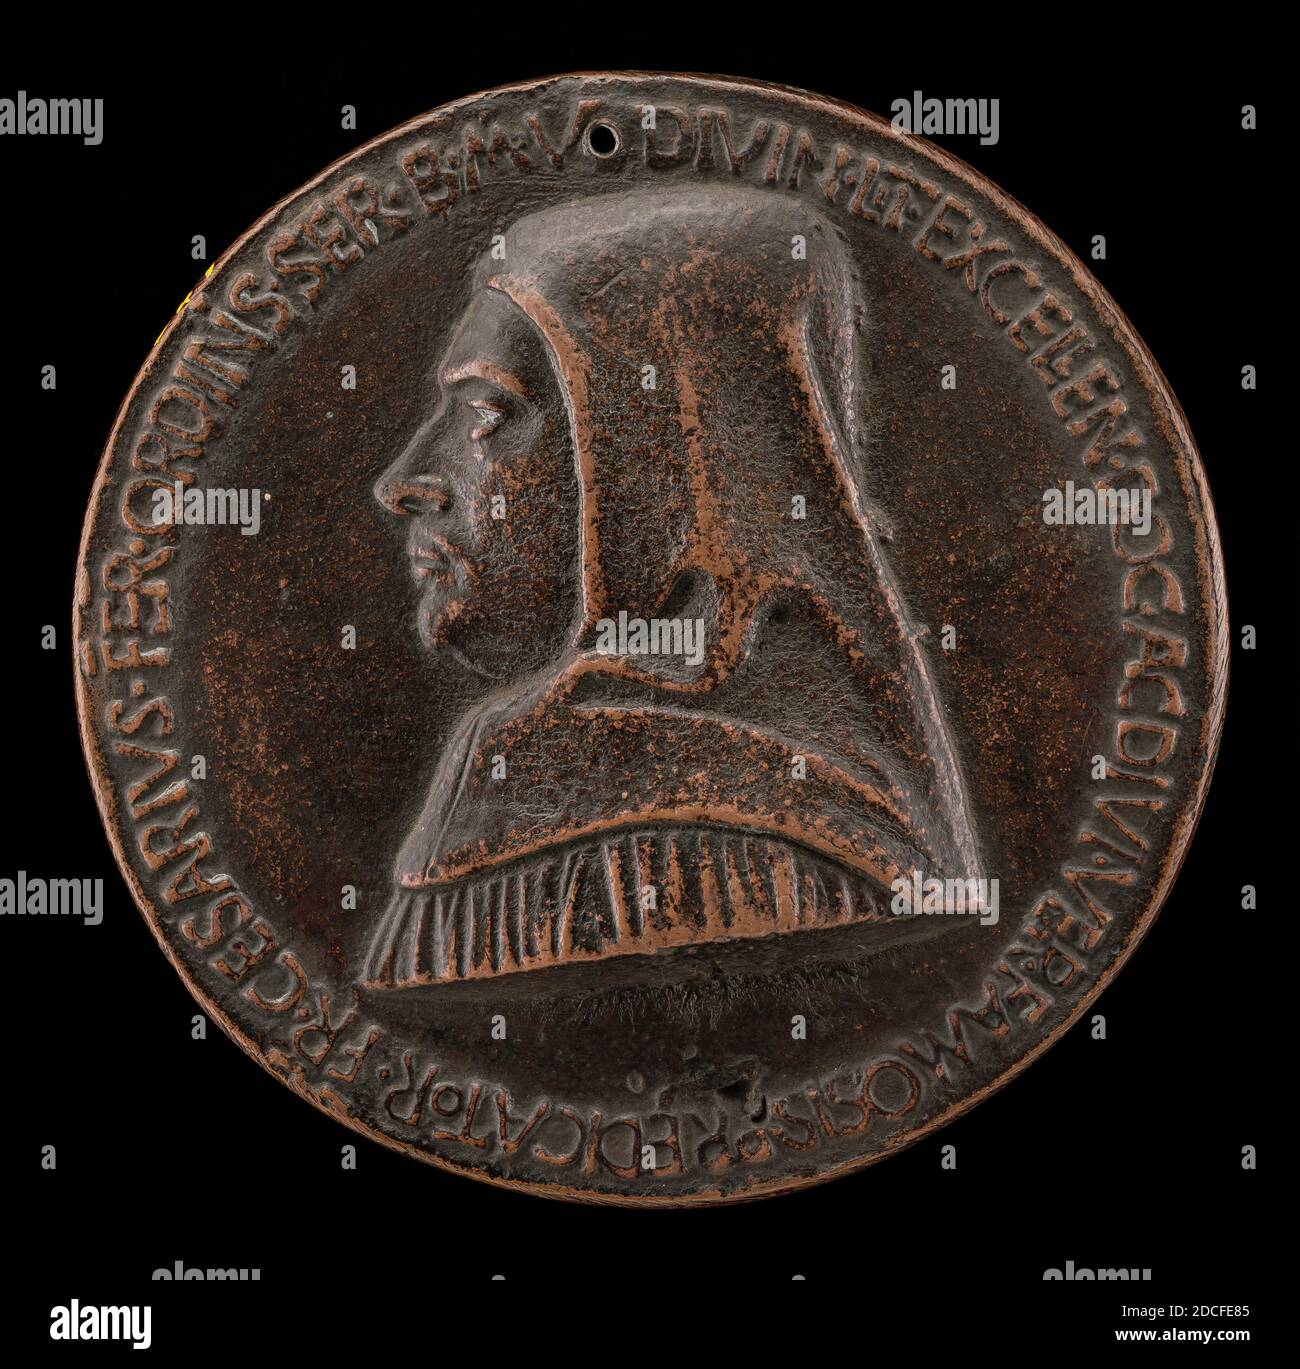 Sperandio, (artist), Mantuan, c. 1425/1428 - c. 1504, Fra Cesario of Ferrara, died 1490, Servite Monk, c. 1467, bronze, overall (diameter): 8.16 cm (3 3/16 in.), gross weight: 193.37 gr (0.426 lb.), axis: 12:00 Stock Photo